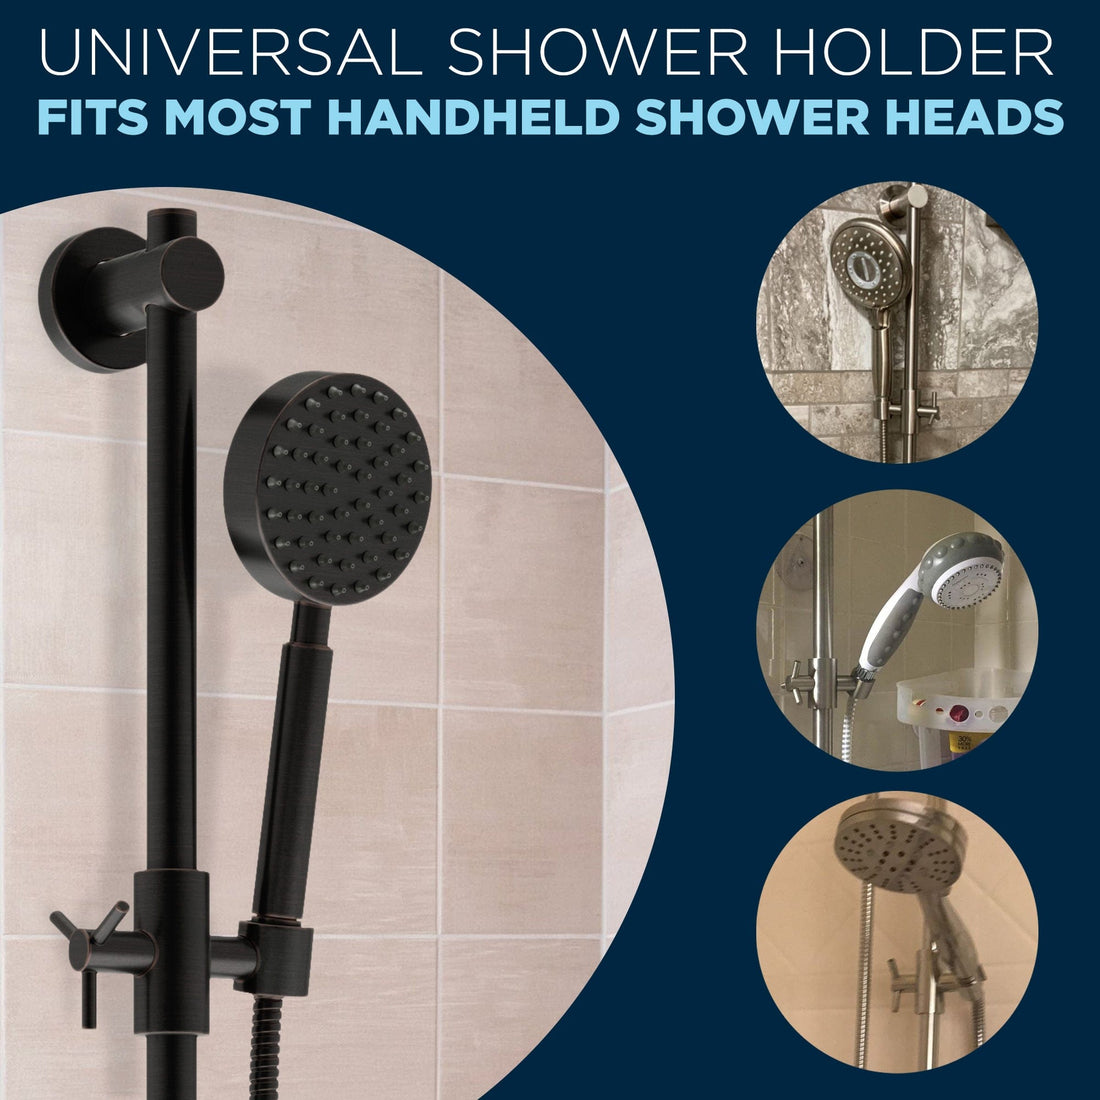 Universal Shower Holder Fits Most Handheld Shower Heads Slide Bar Oil Rubbed Bronze - The Shower Head Store